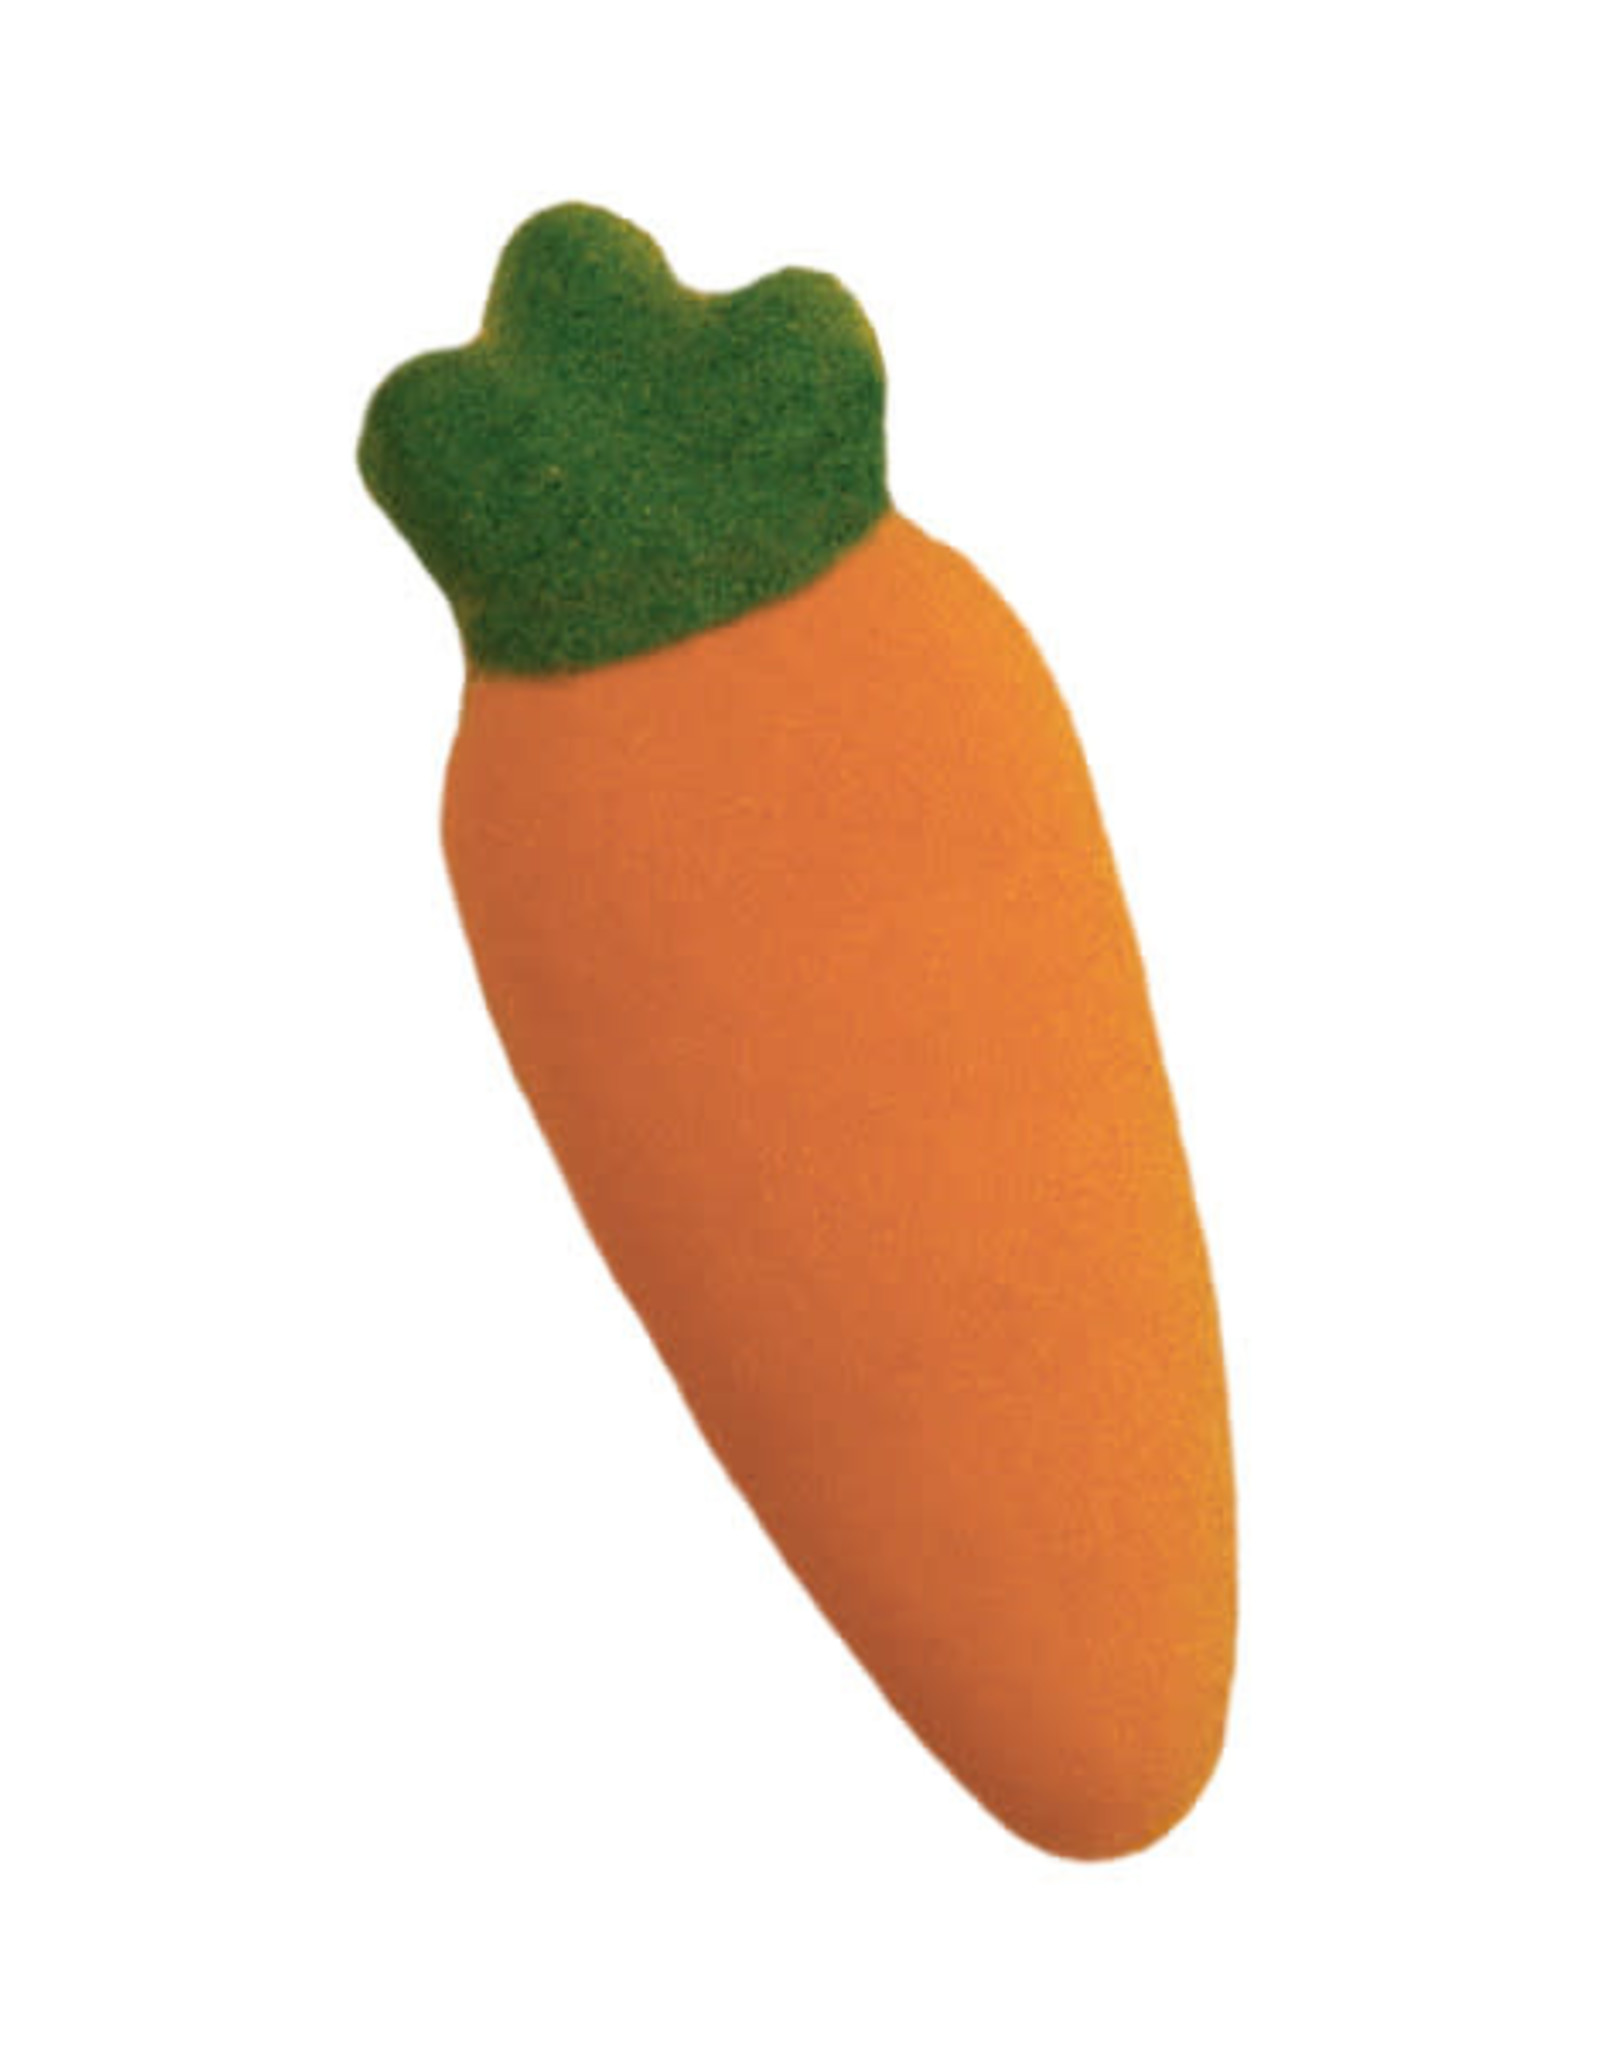 Medium Carrot Dec-Ons (12ct)